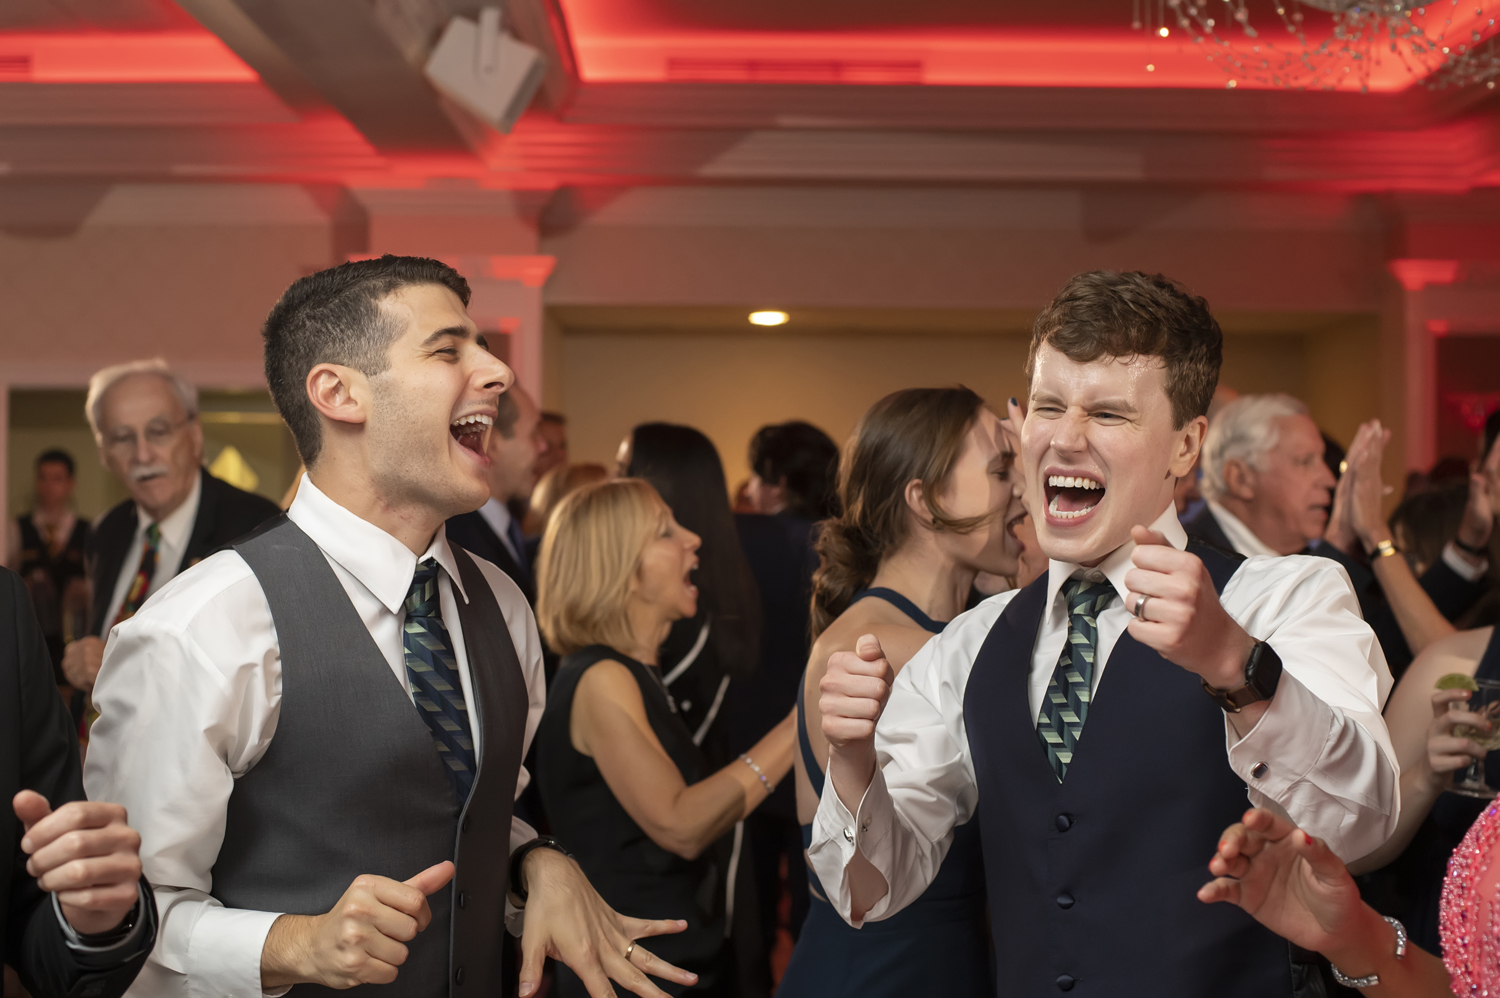 grooms dancing at their wedding reception at the English Manor. LGBTQ wedding